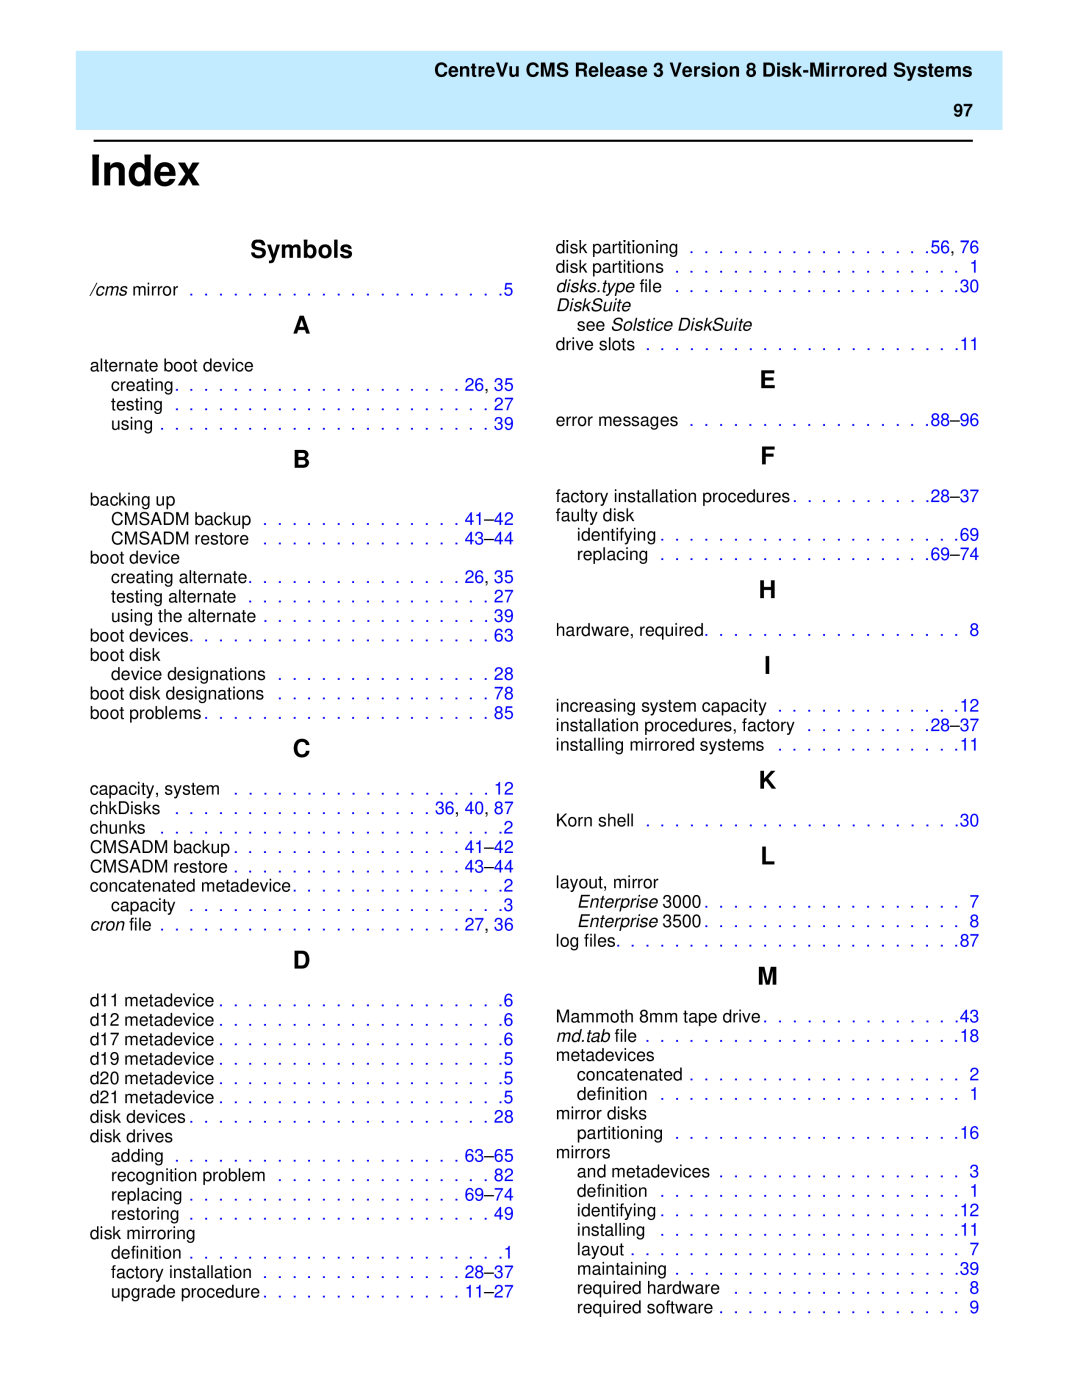 Lucent Technologies 585-210-940 manual Symbols, Index 